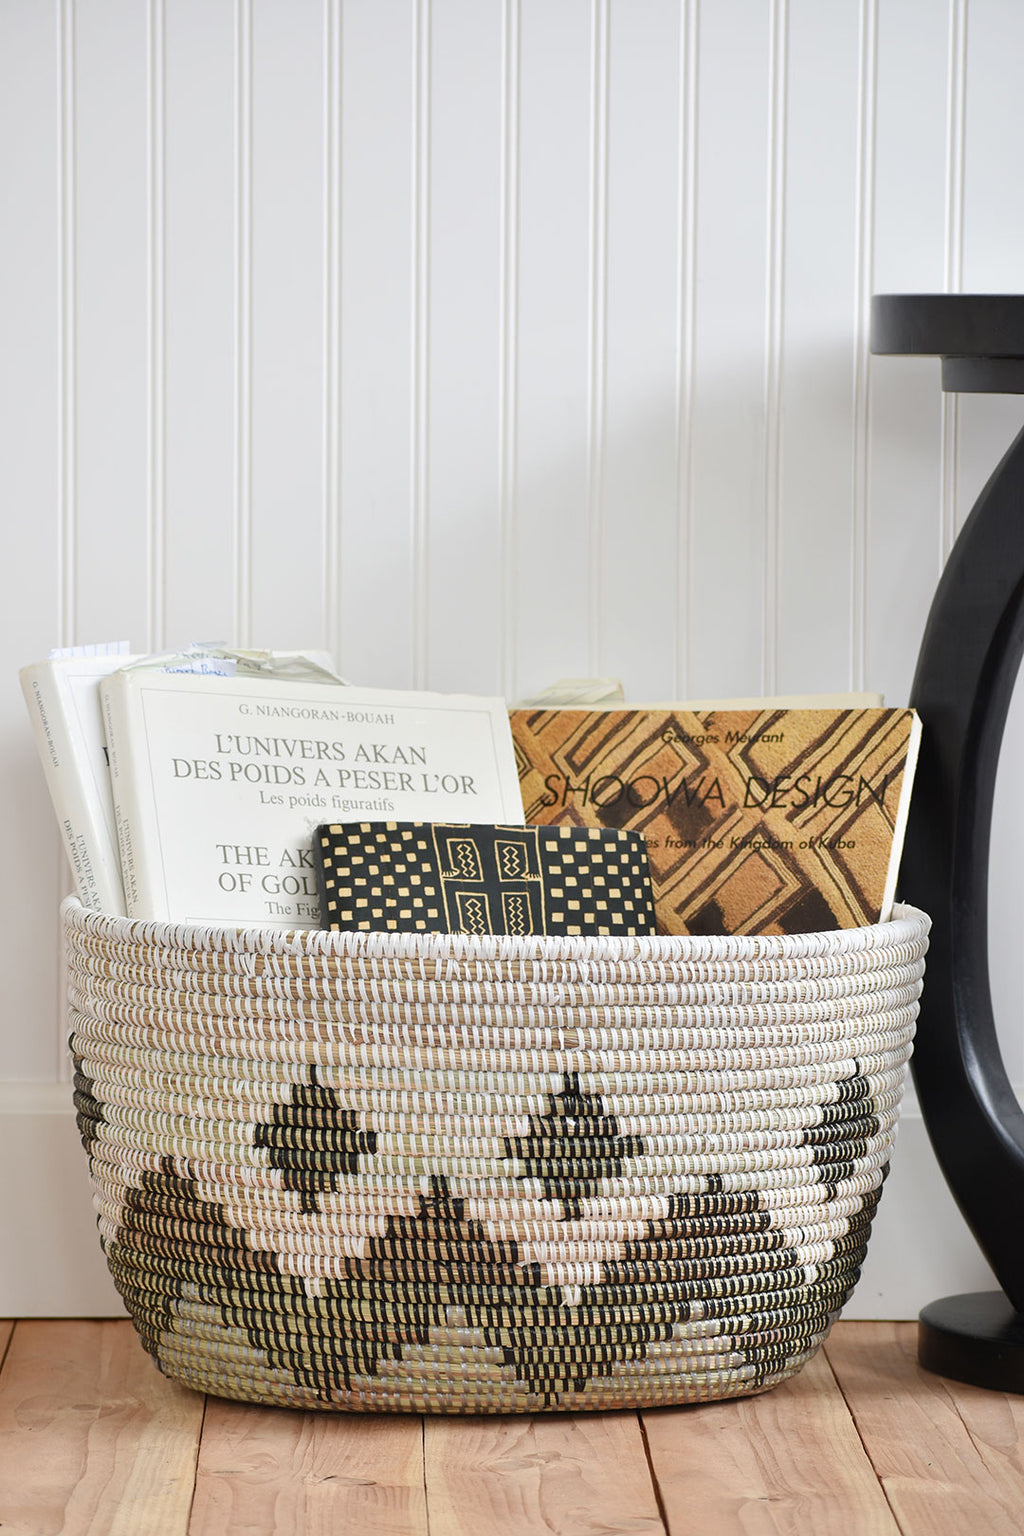 Diamond Design Knitting Basket